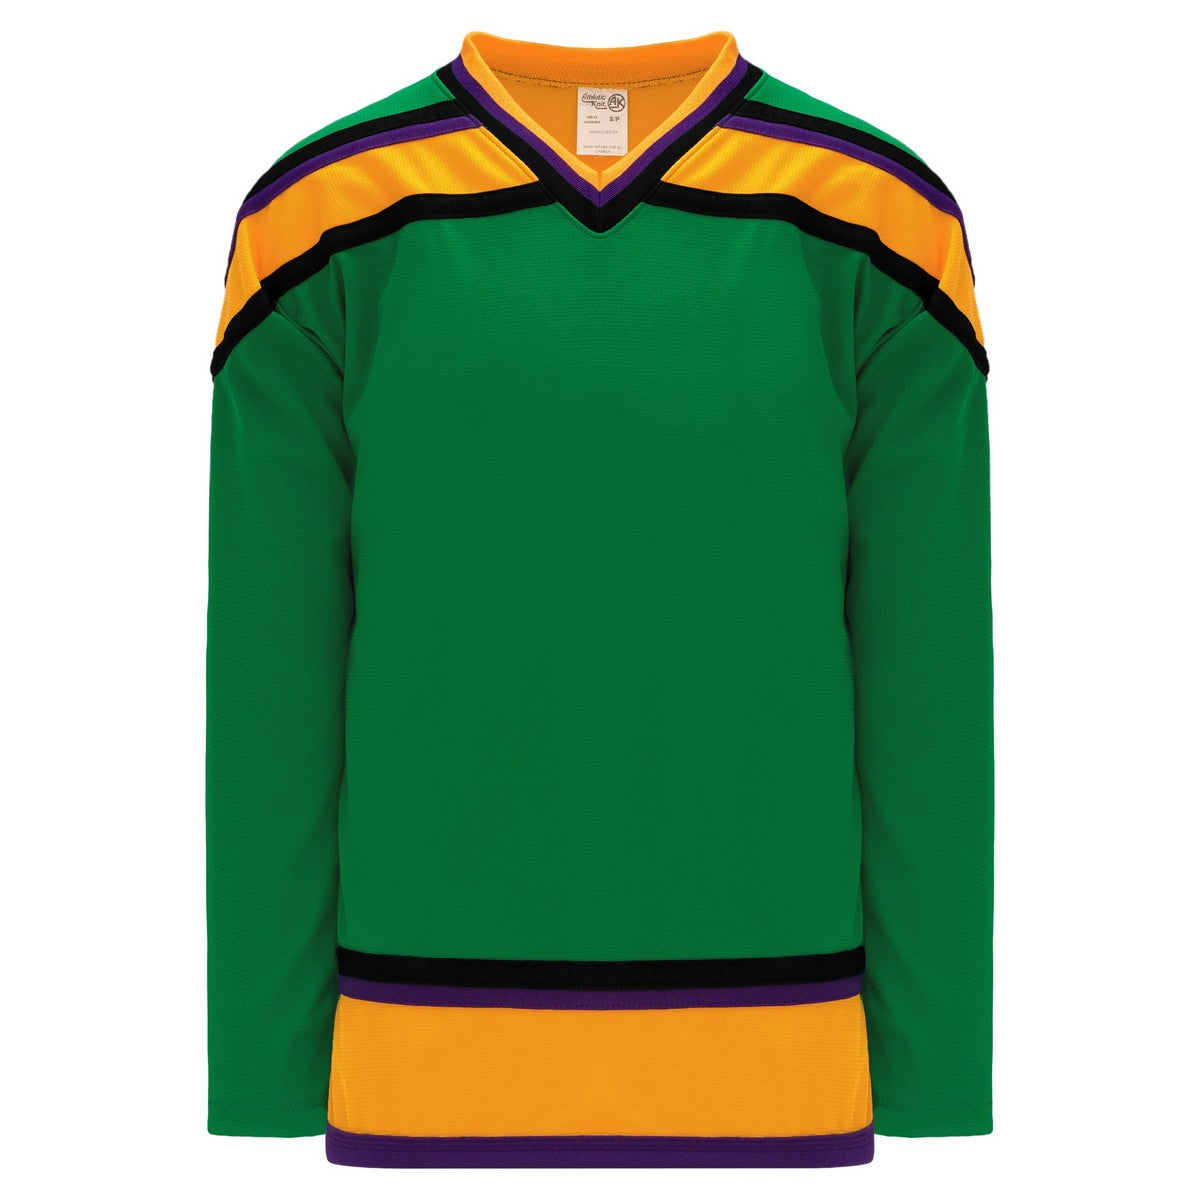 Replica Style Mighty Ducks Hockey Jersey